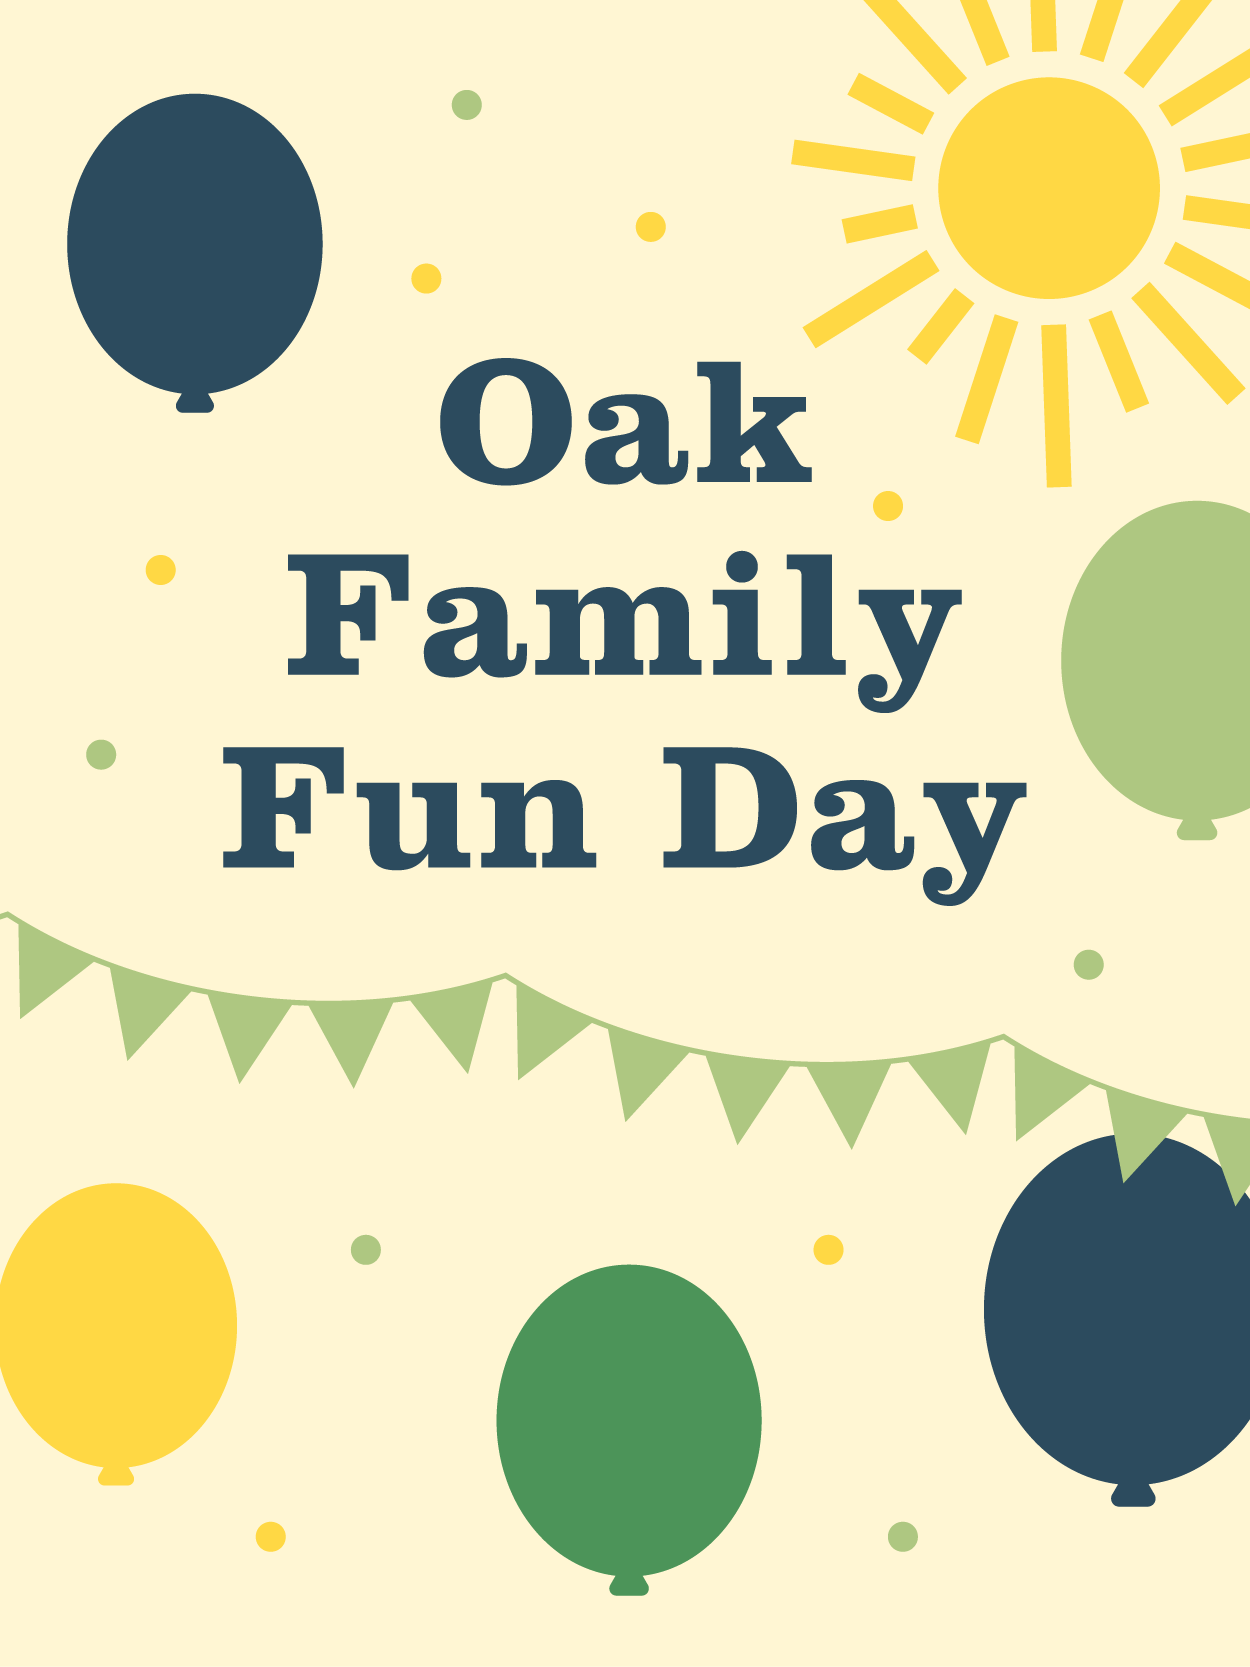 The British Oak Family Fun Day